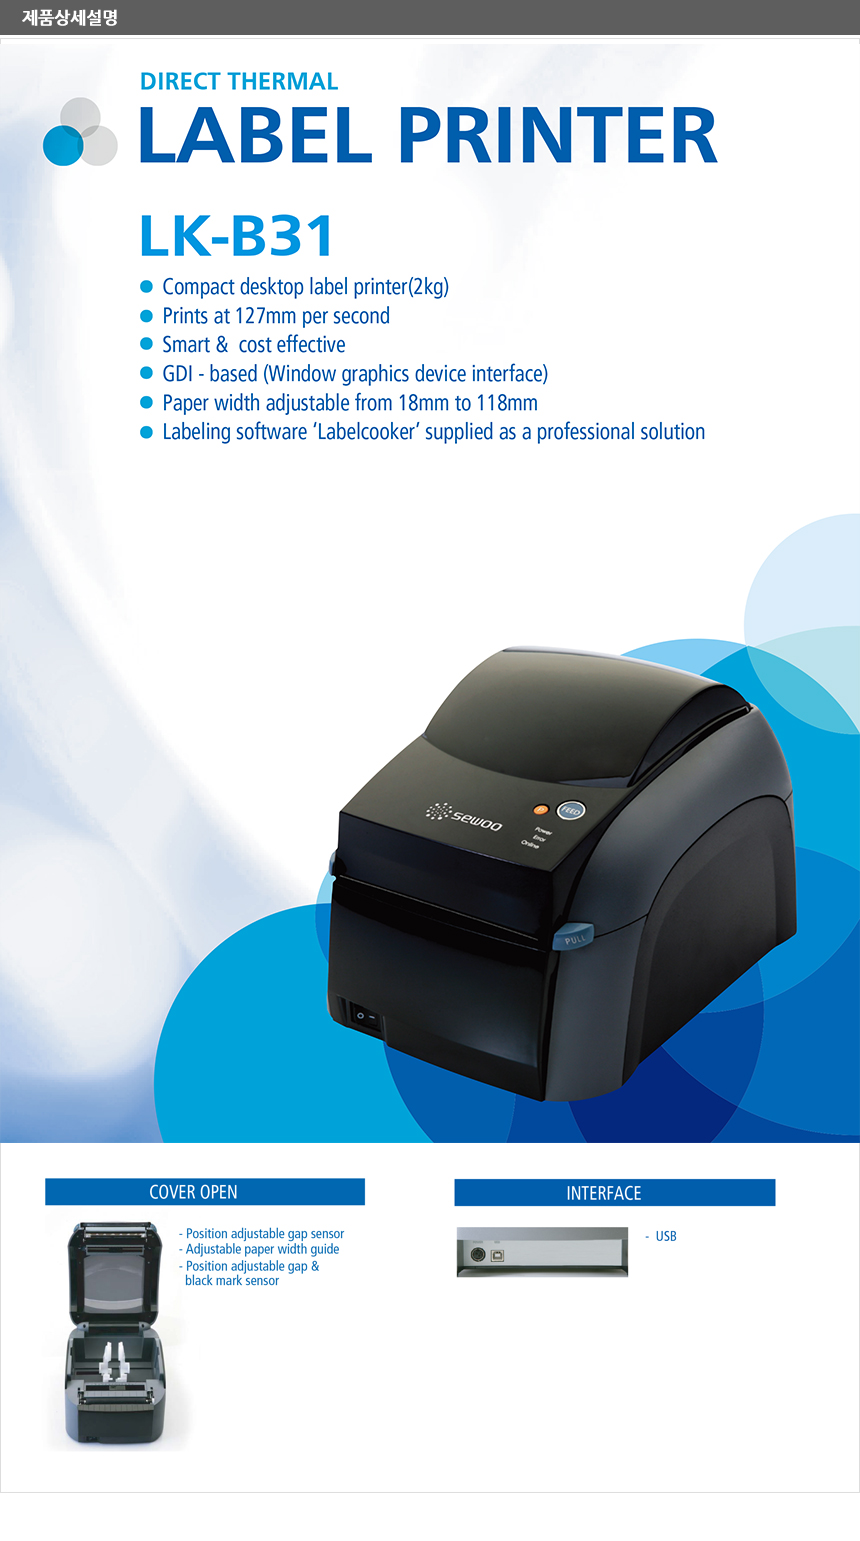 lk-b31 compact desktop label printer smart&cost effevtive gdi-based